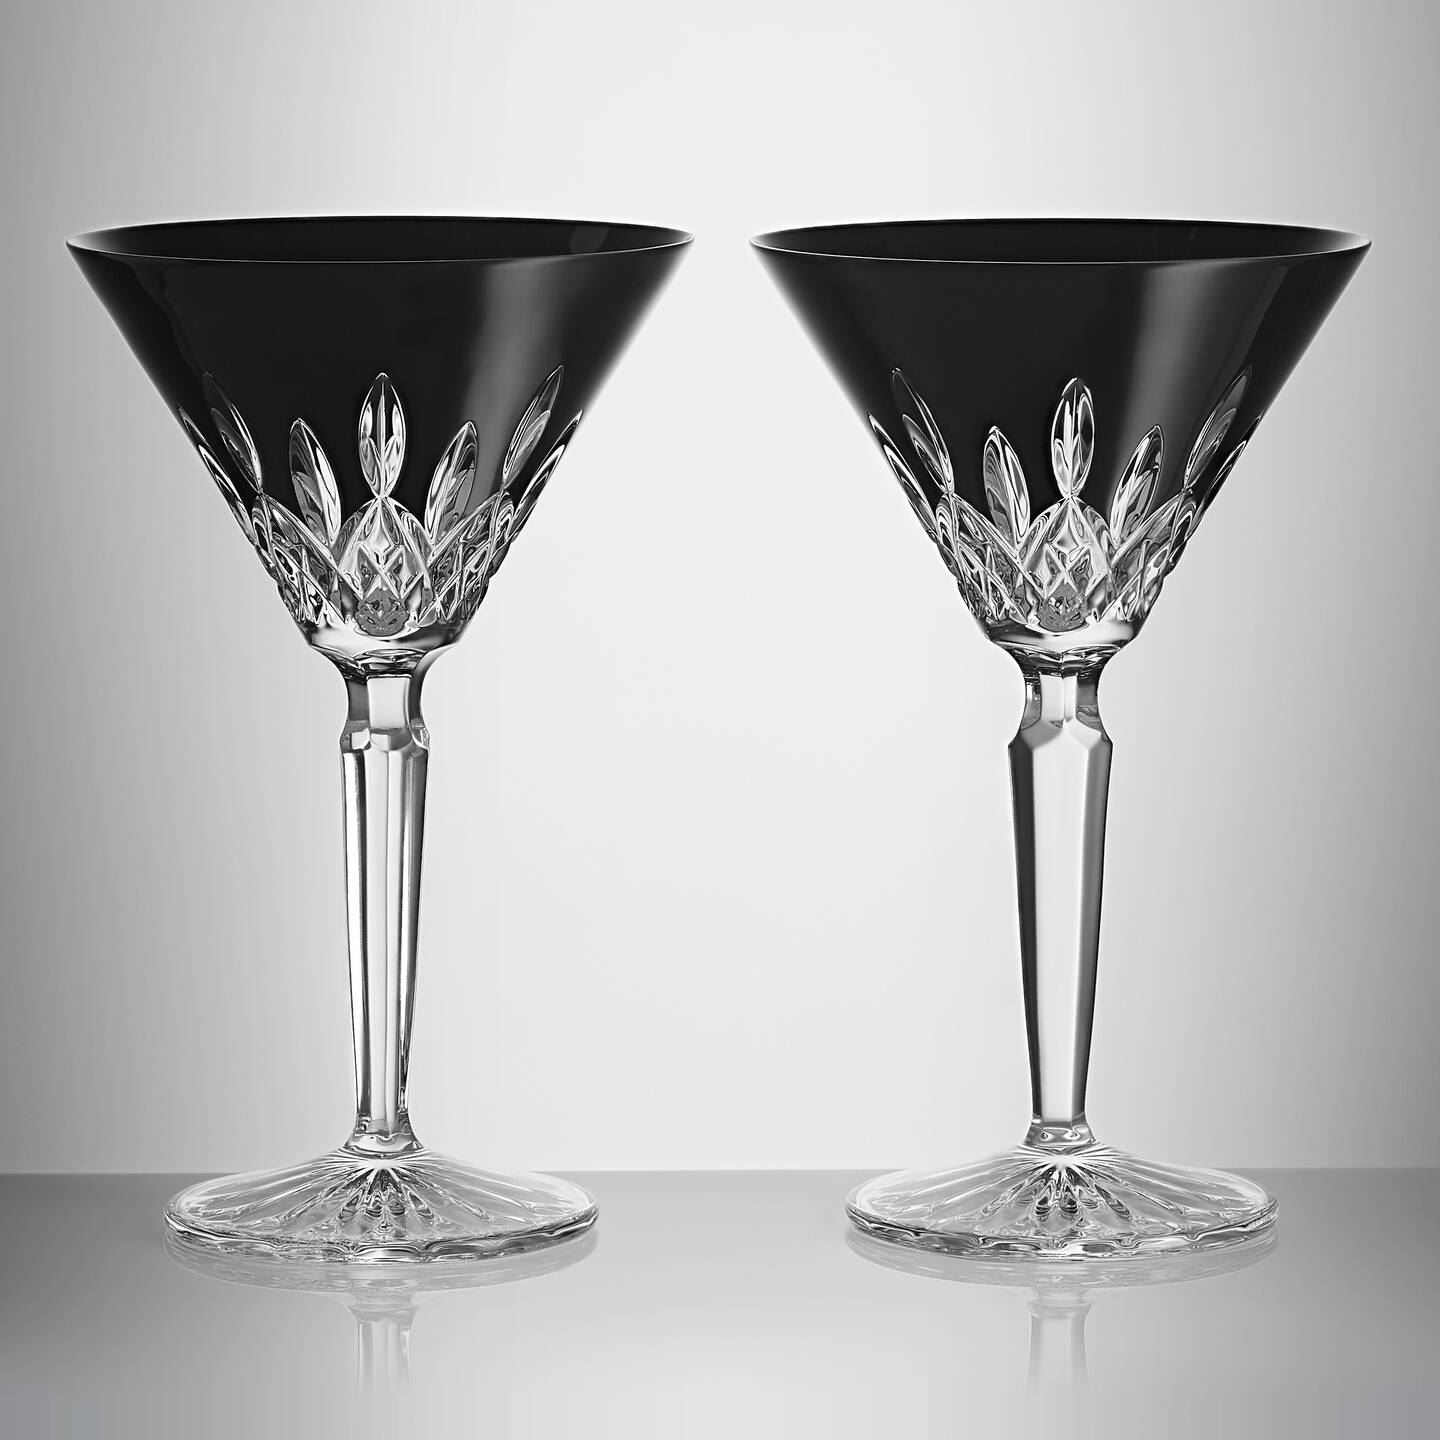 Fab Find: Black Martini Glasses